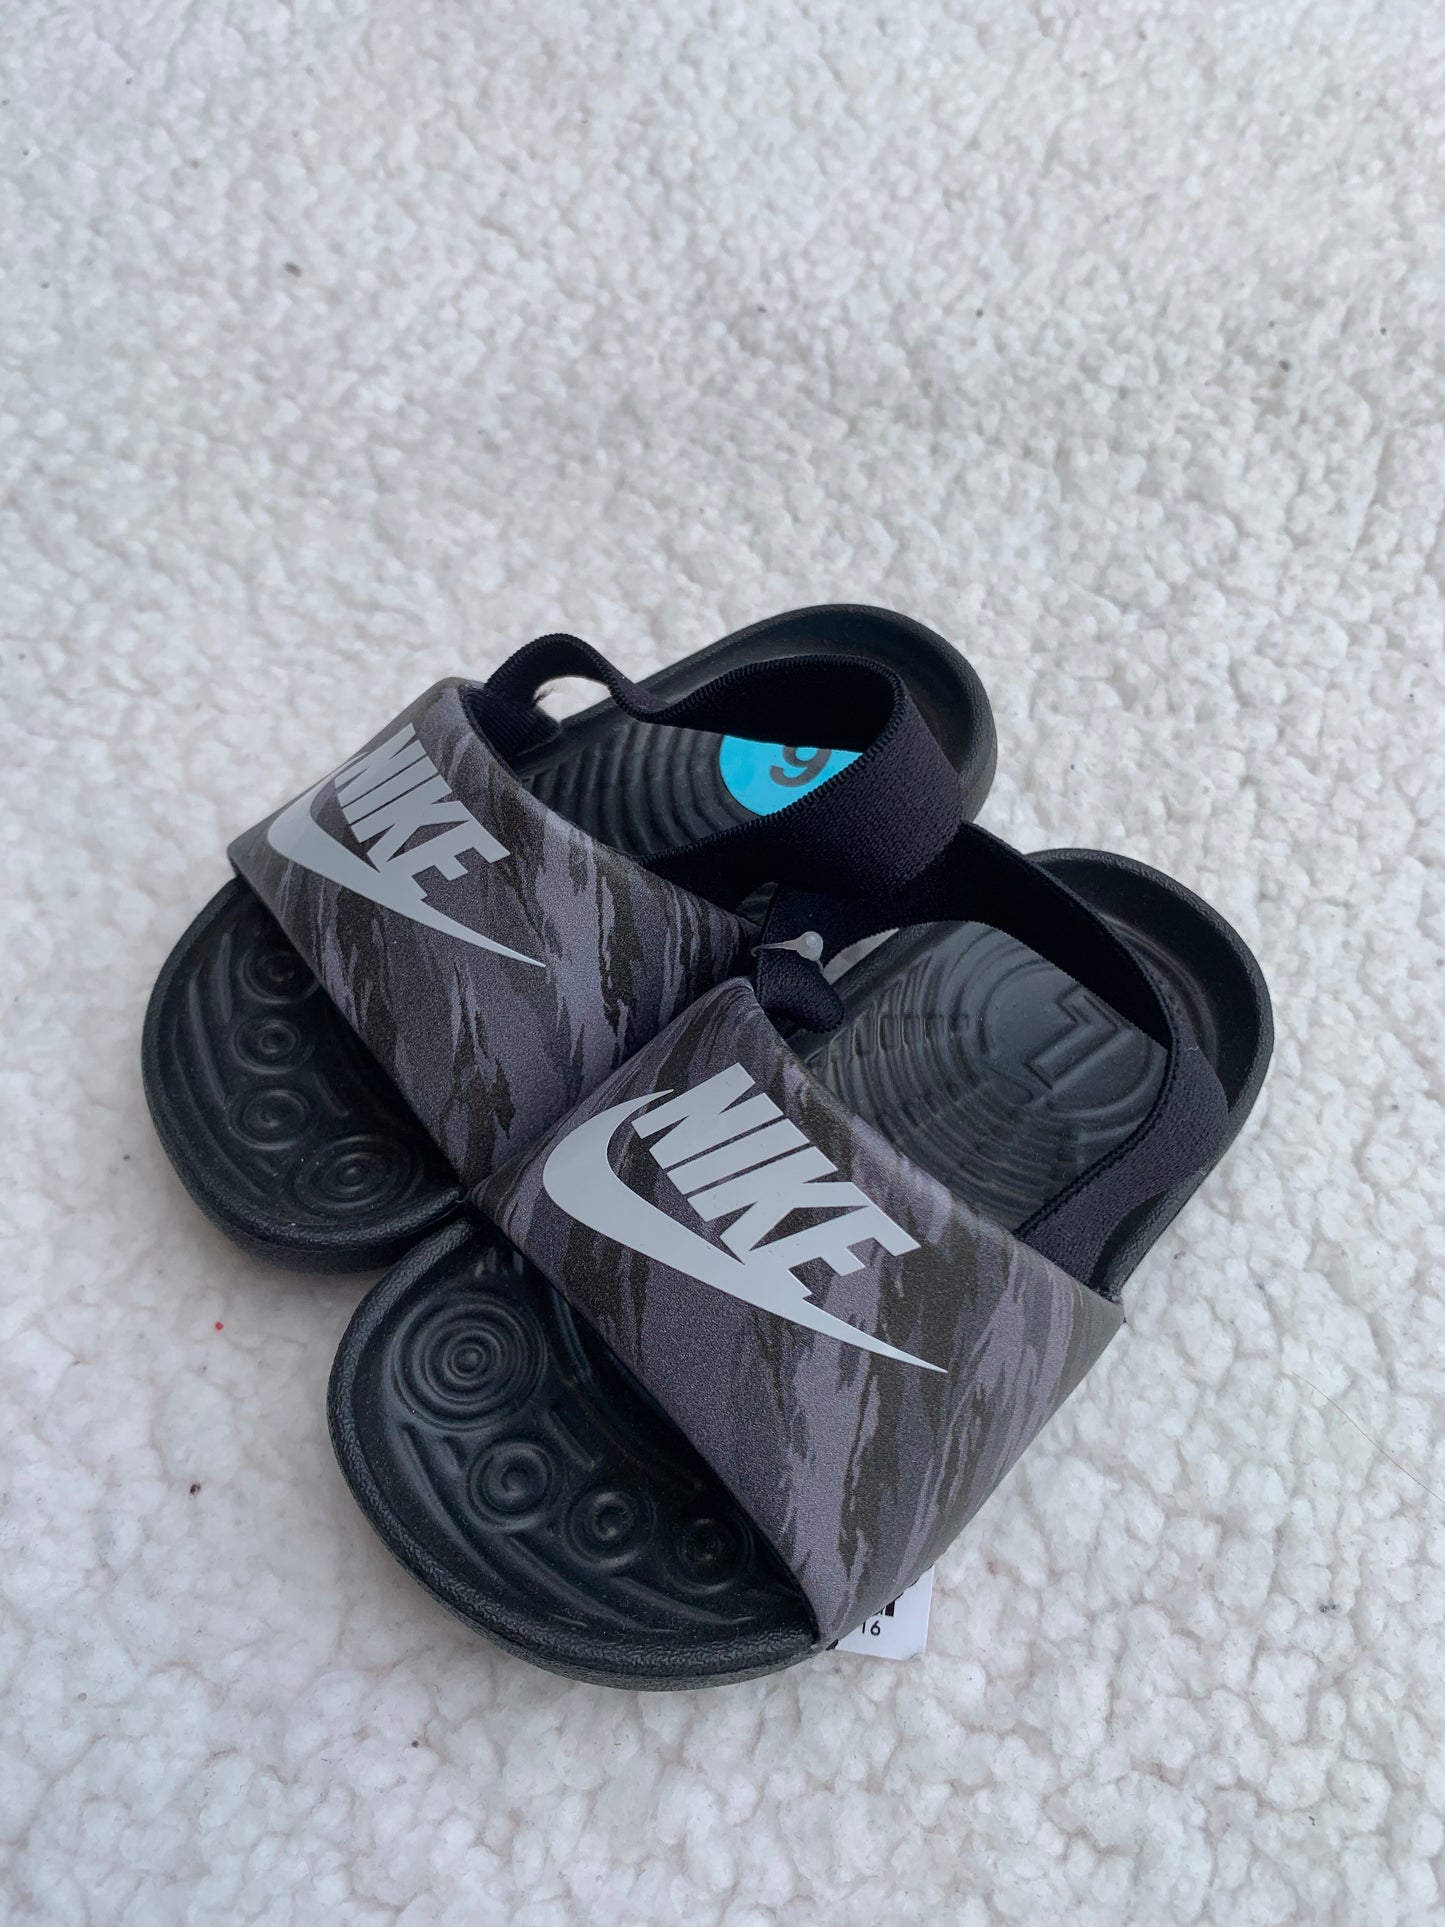 Nike sandal